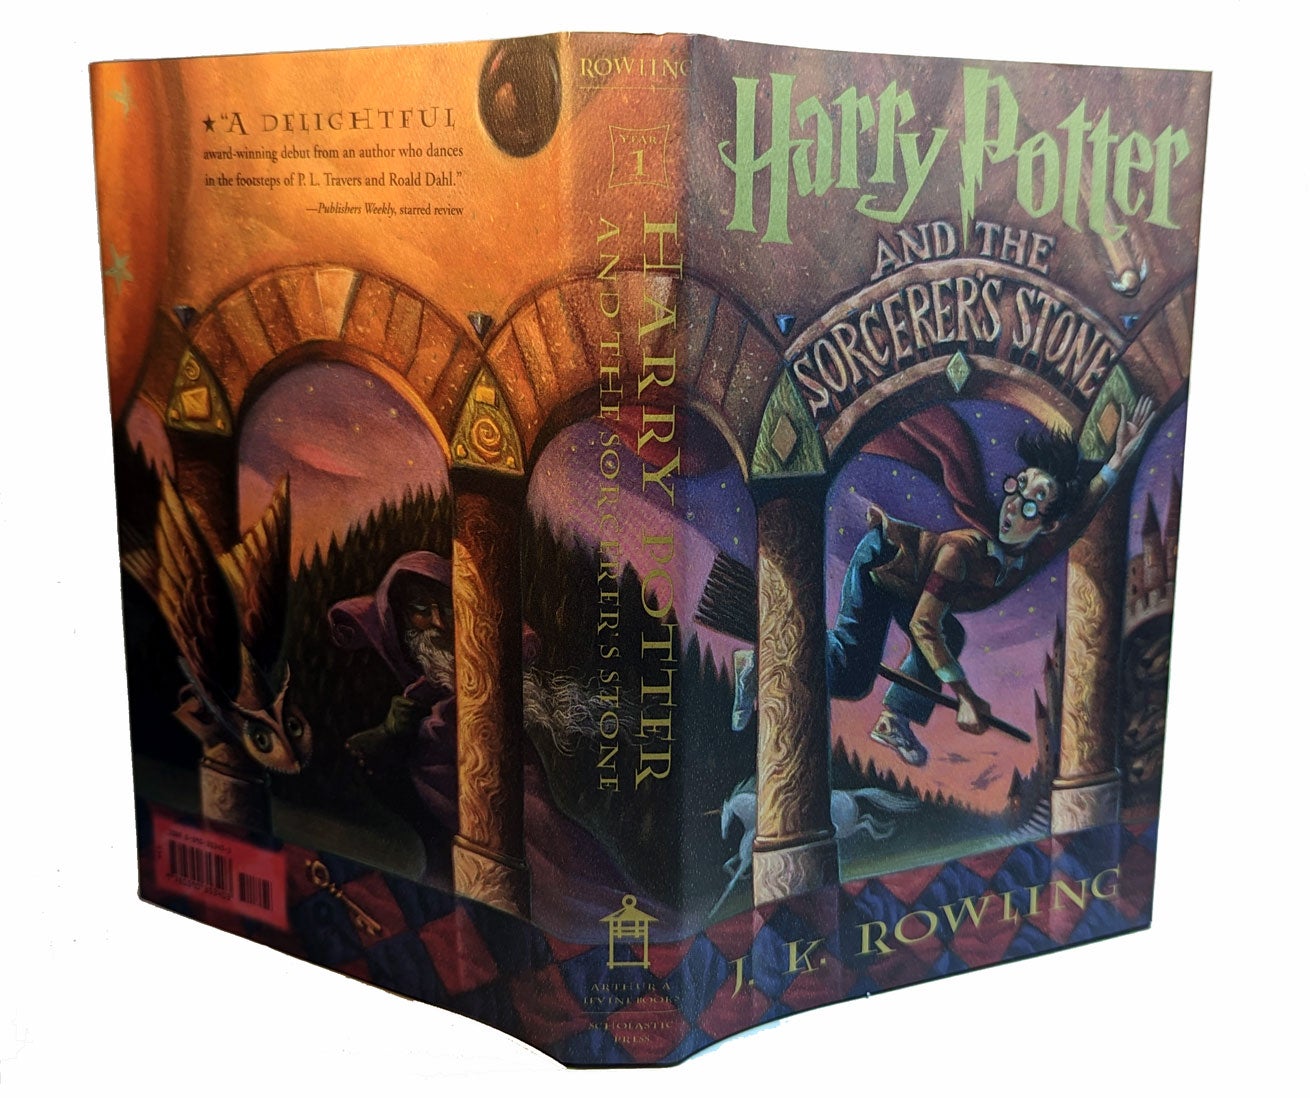 Harry Potter Books Scholastic J.K. Rowling Lot of 4 Books